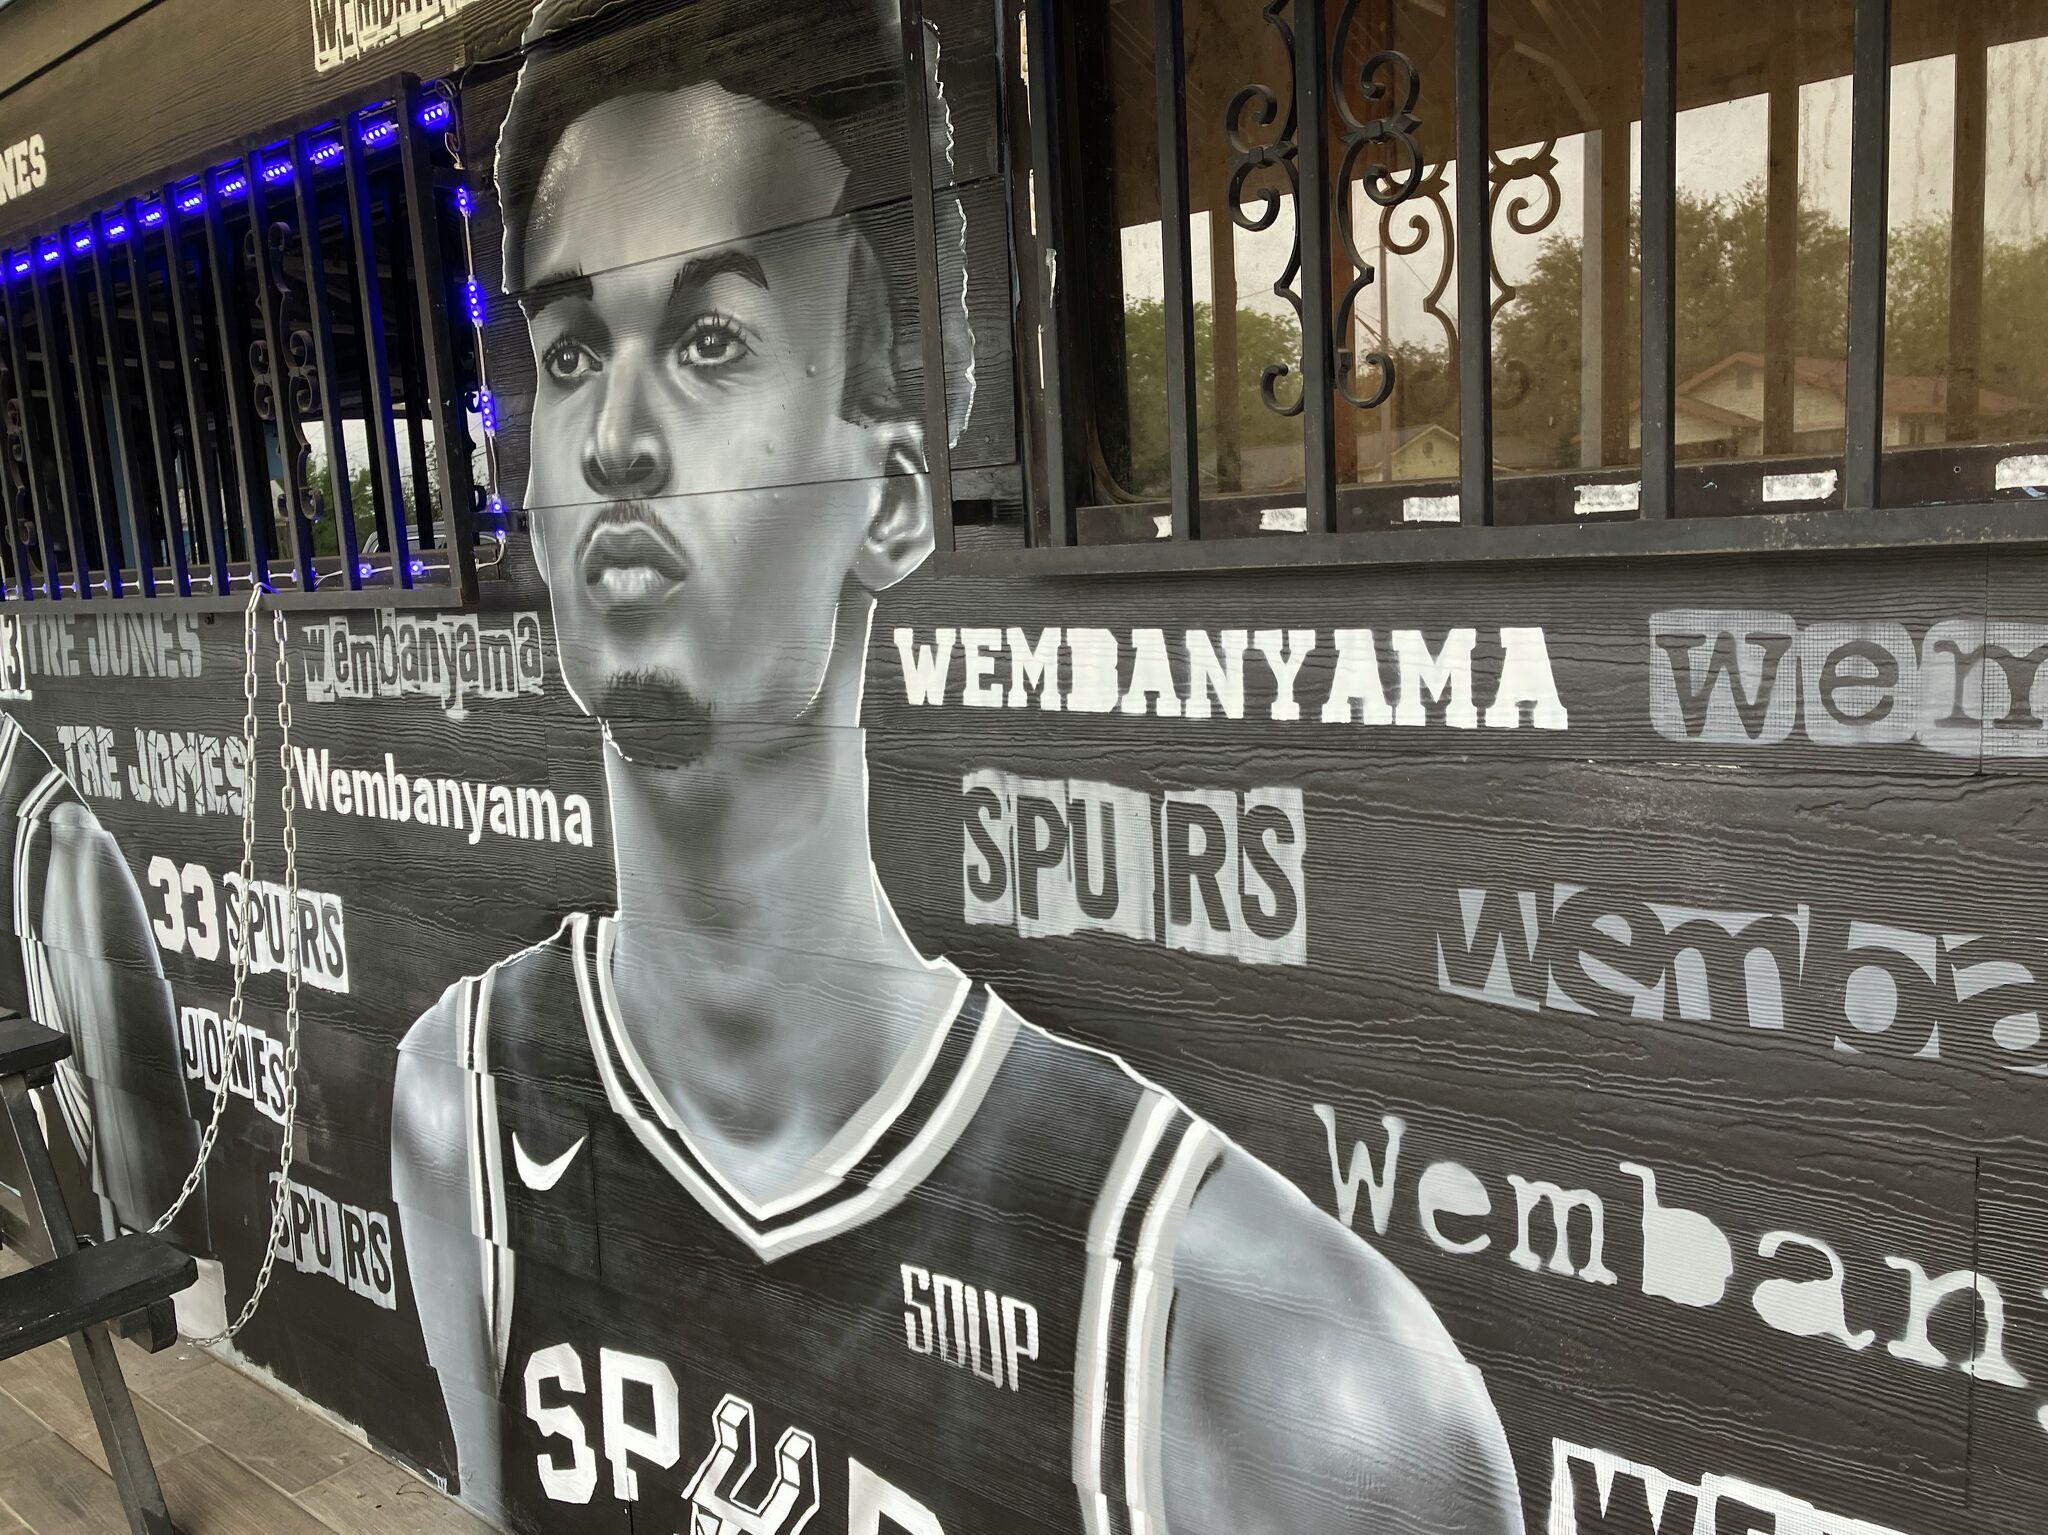 Nba Prospect Victor Wembanyama Depicted In Spurs Jersey